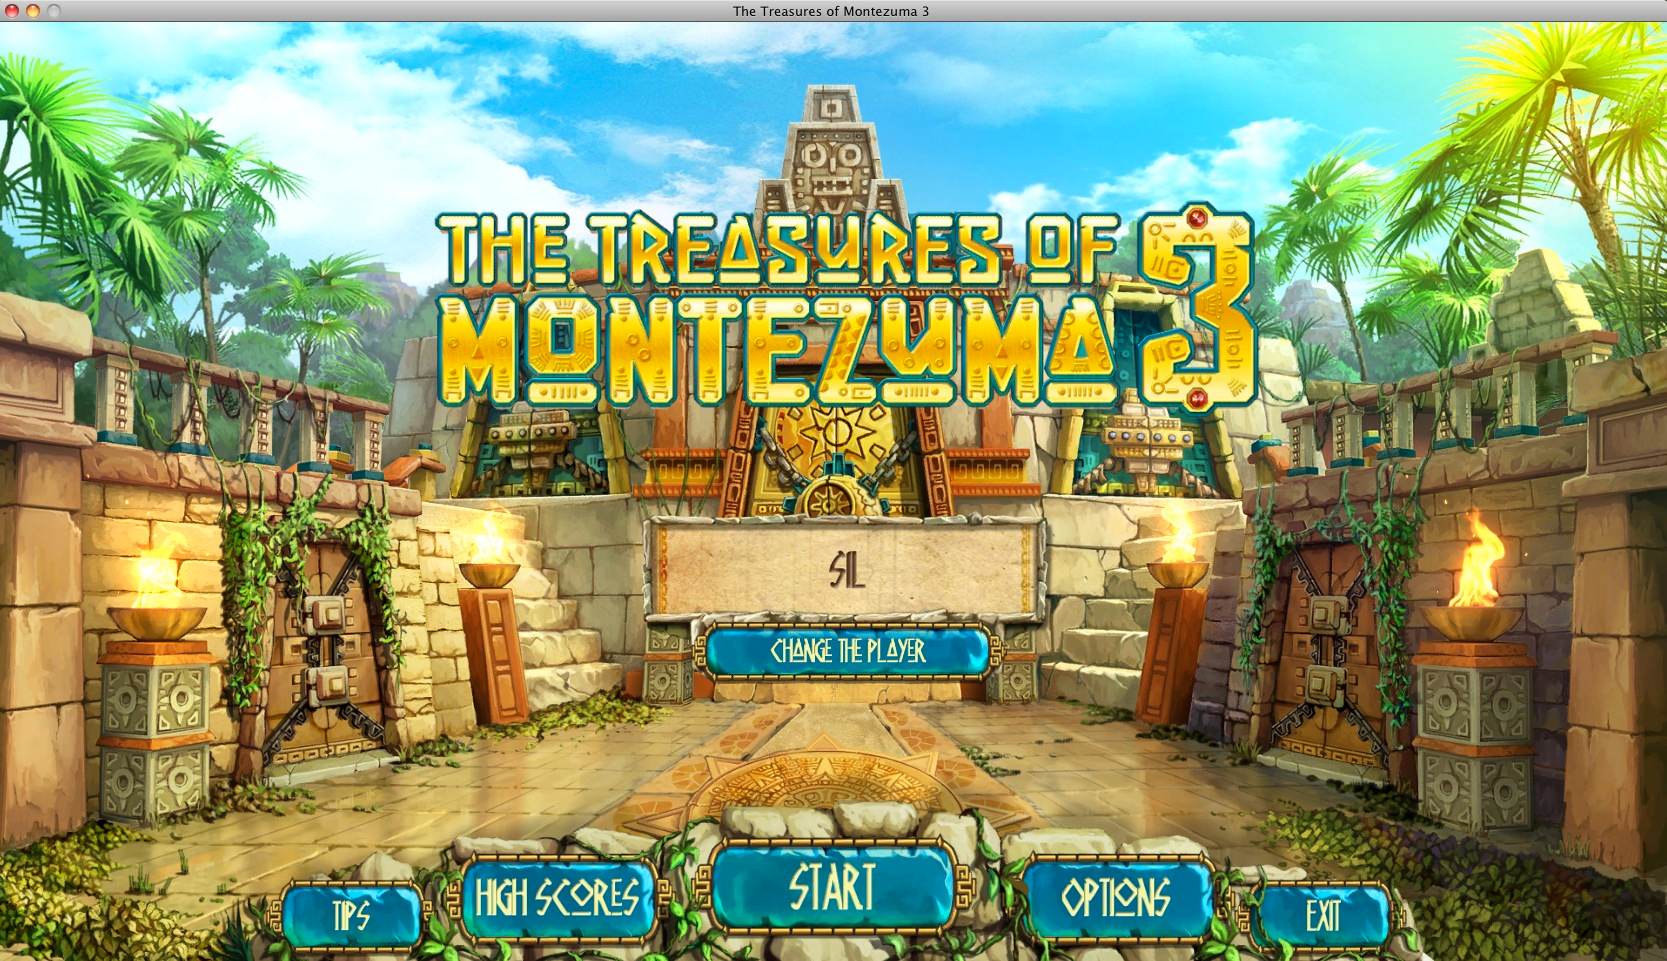 The Treasures of Montezuma 3 1.1 : Main menu